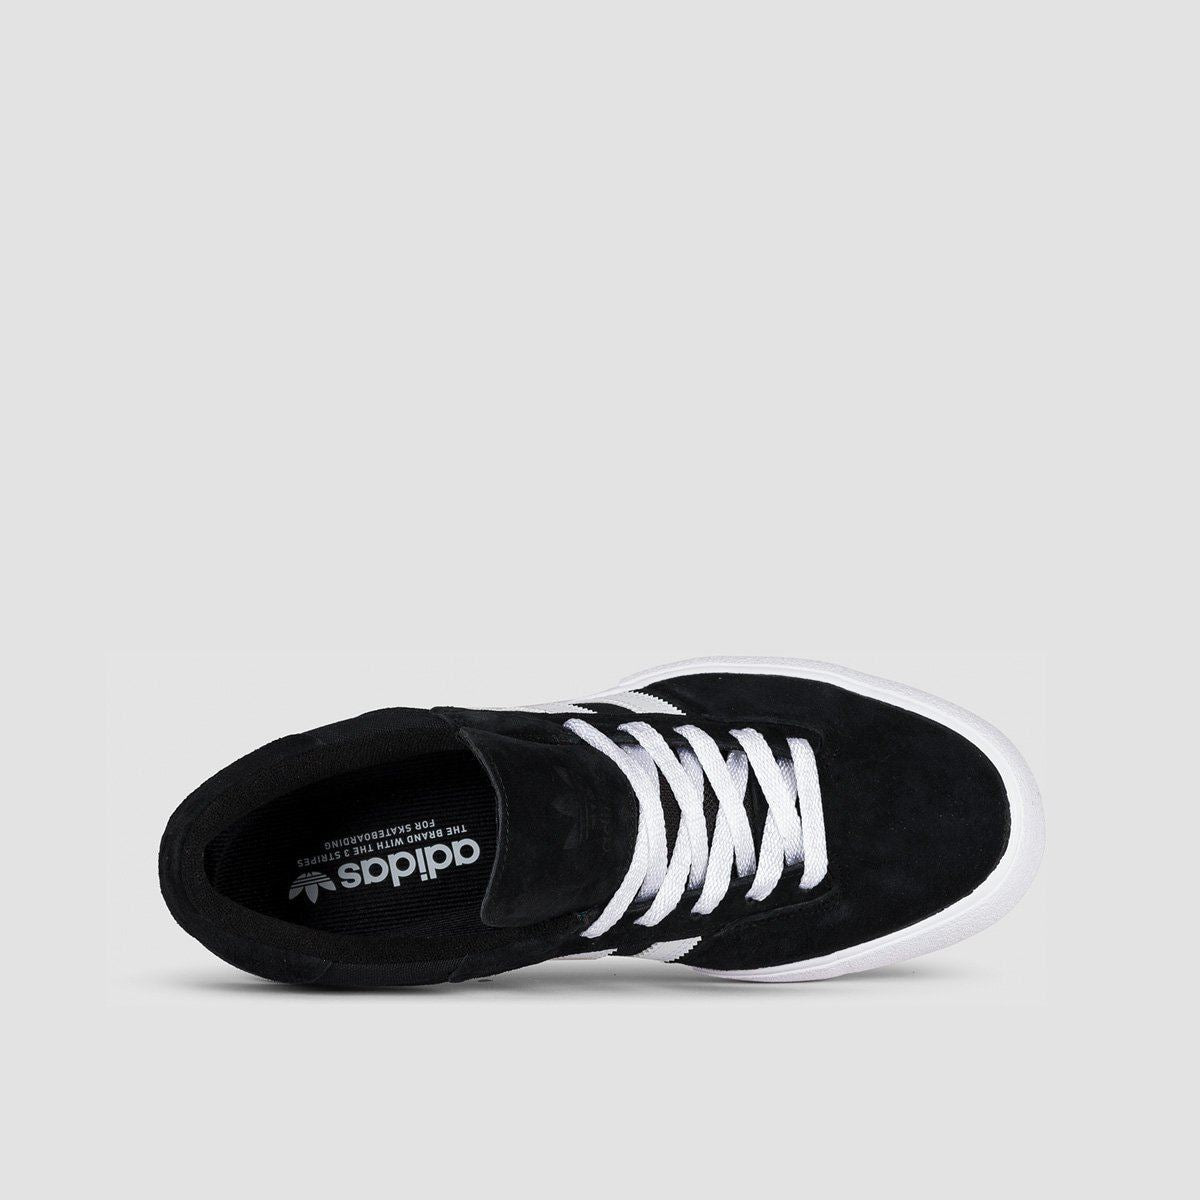 adidas Matchbreak Super Shoes - Core Black/Footwear White/Gold Metallic